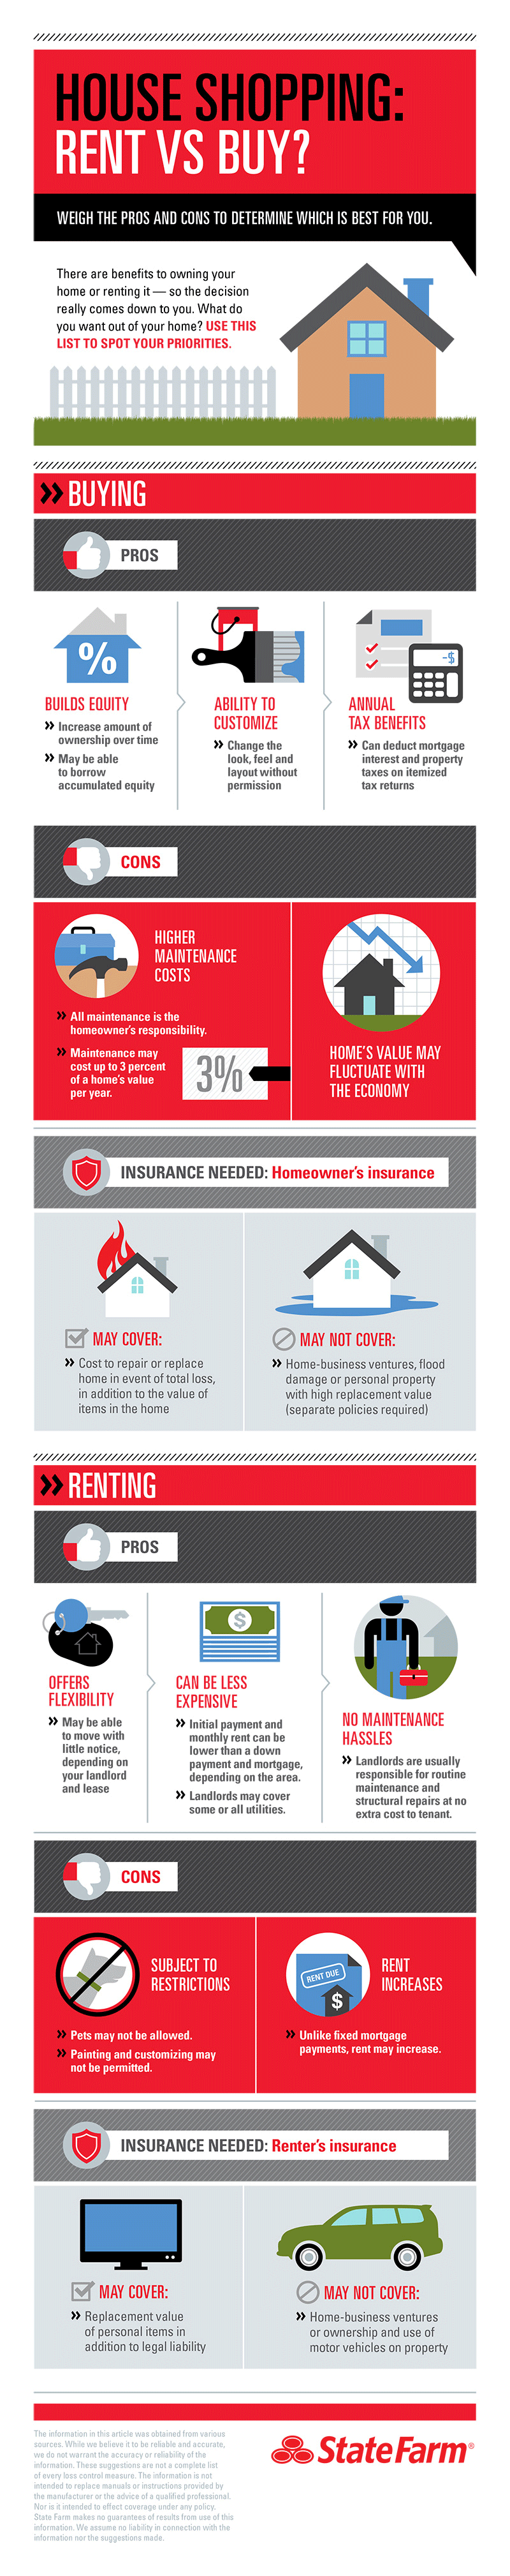 703-house-shopping-rent-v-buy-infographic